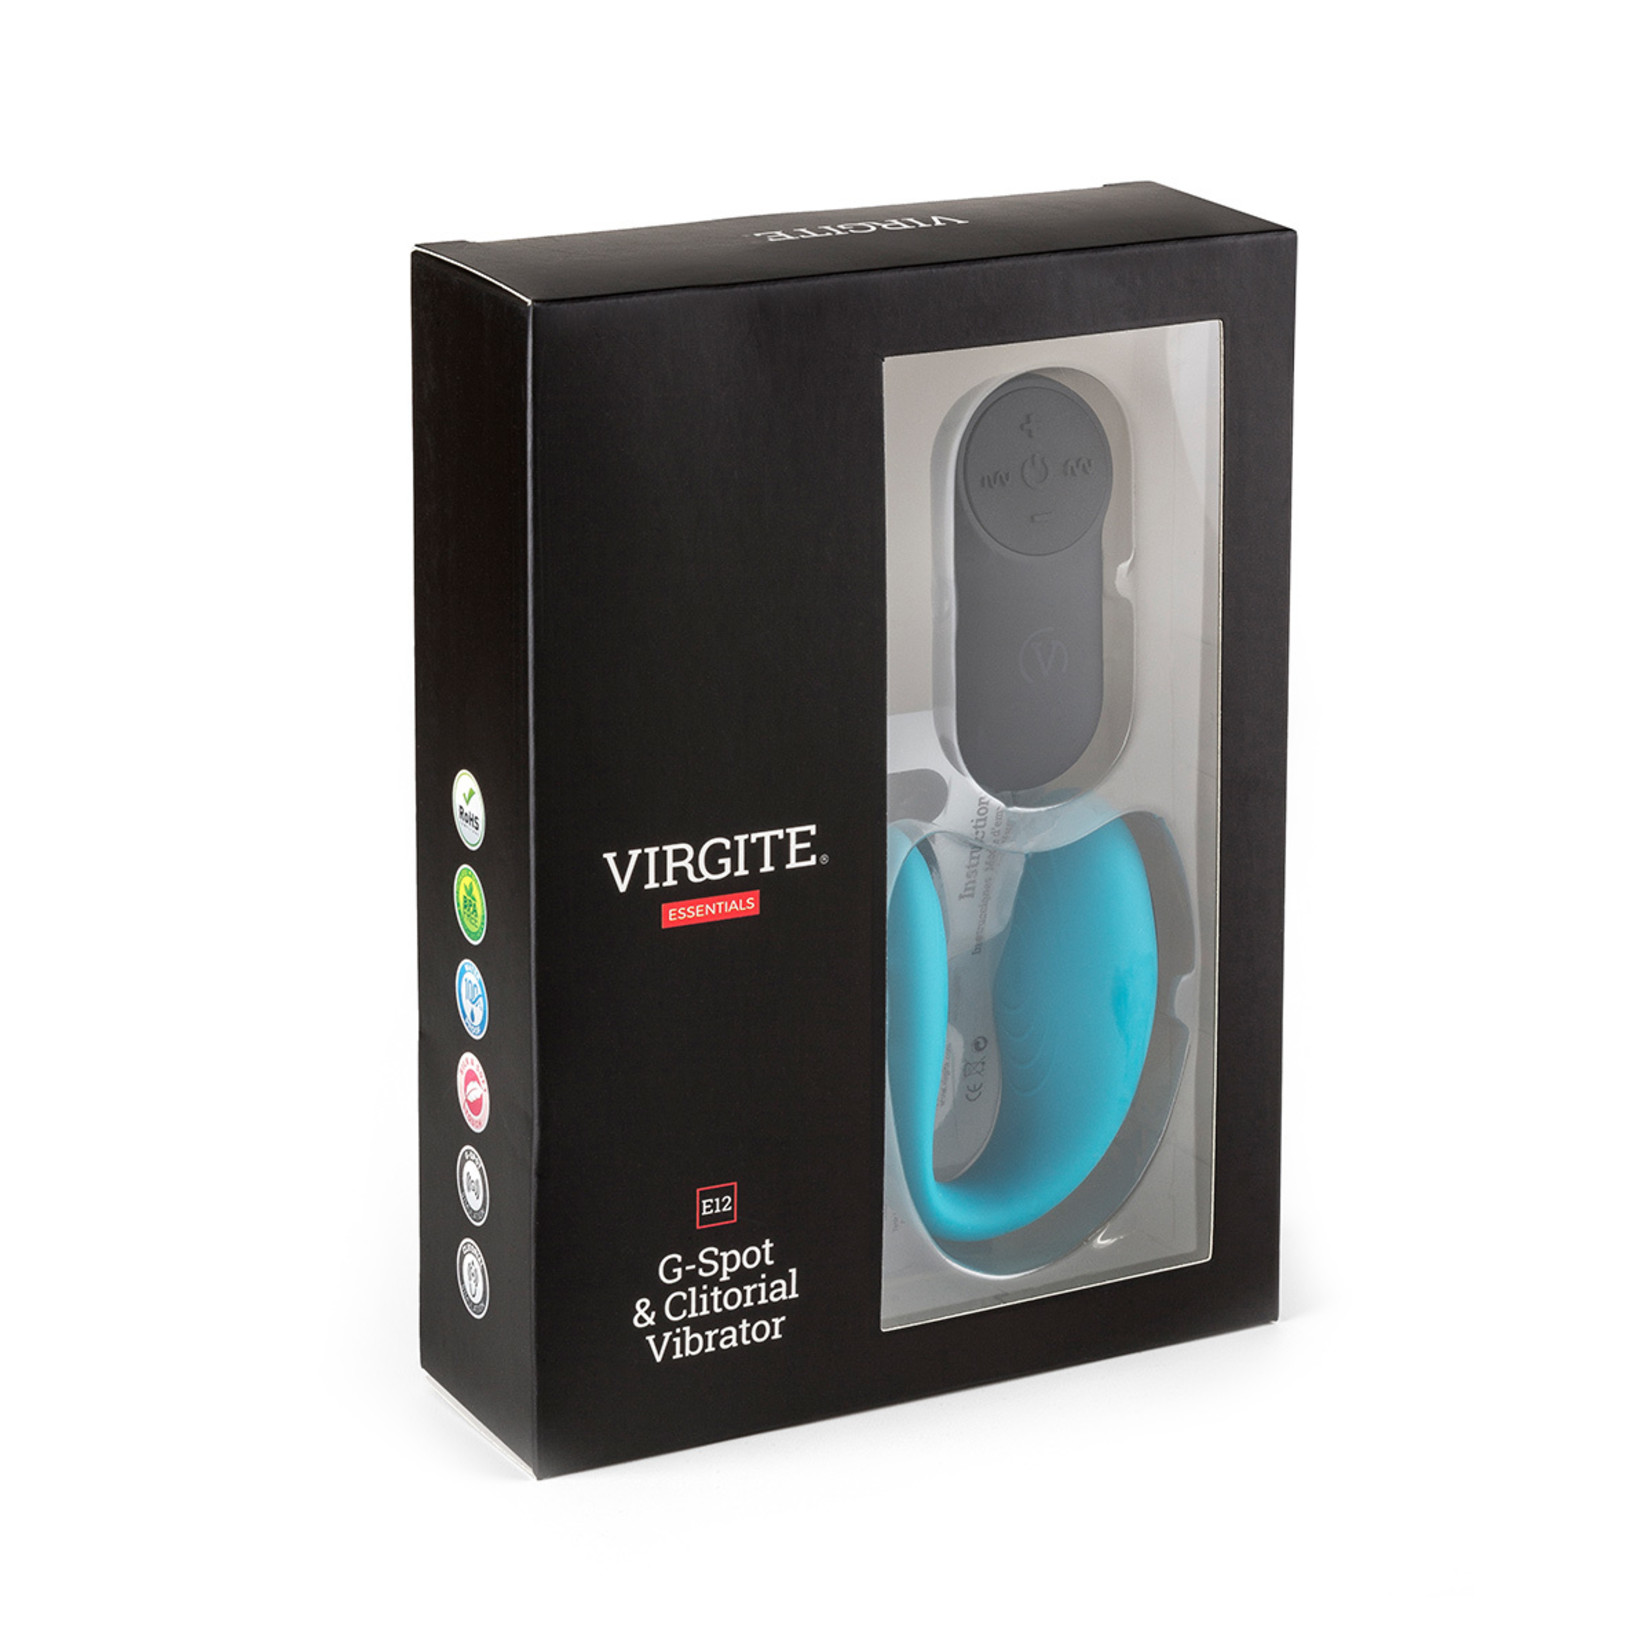 Virgite G-spot & Clitoral Vibrator E12 - Blue